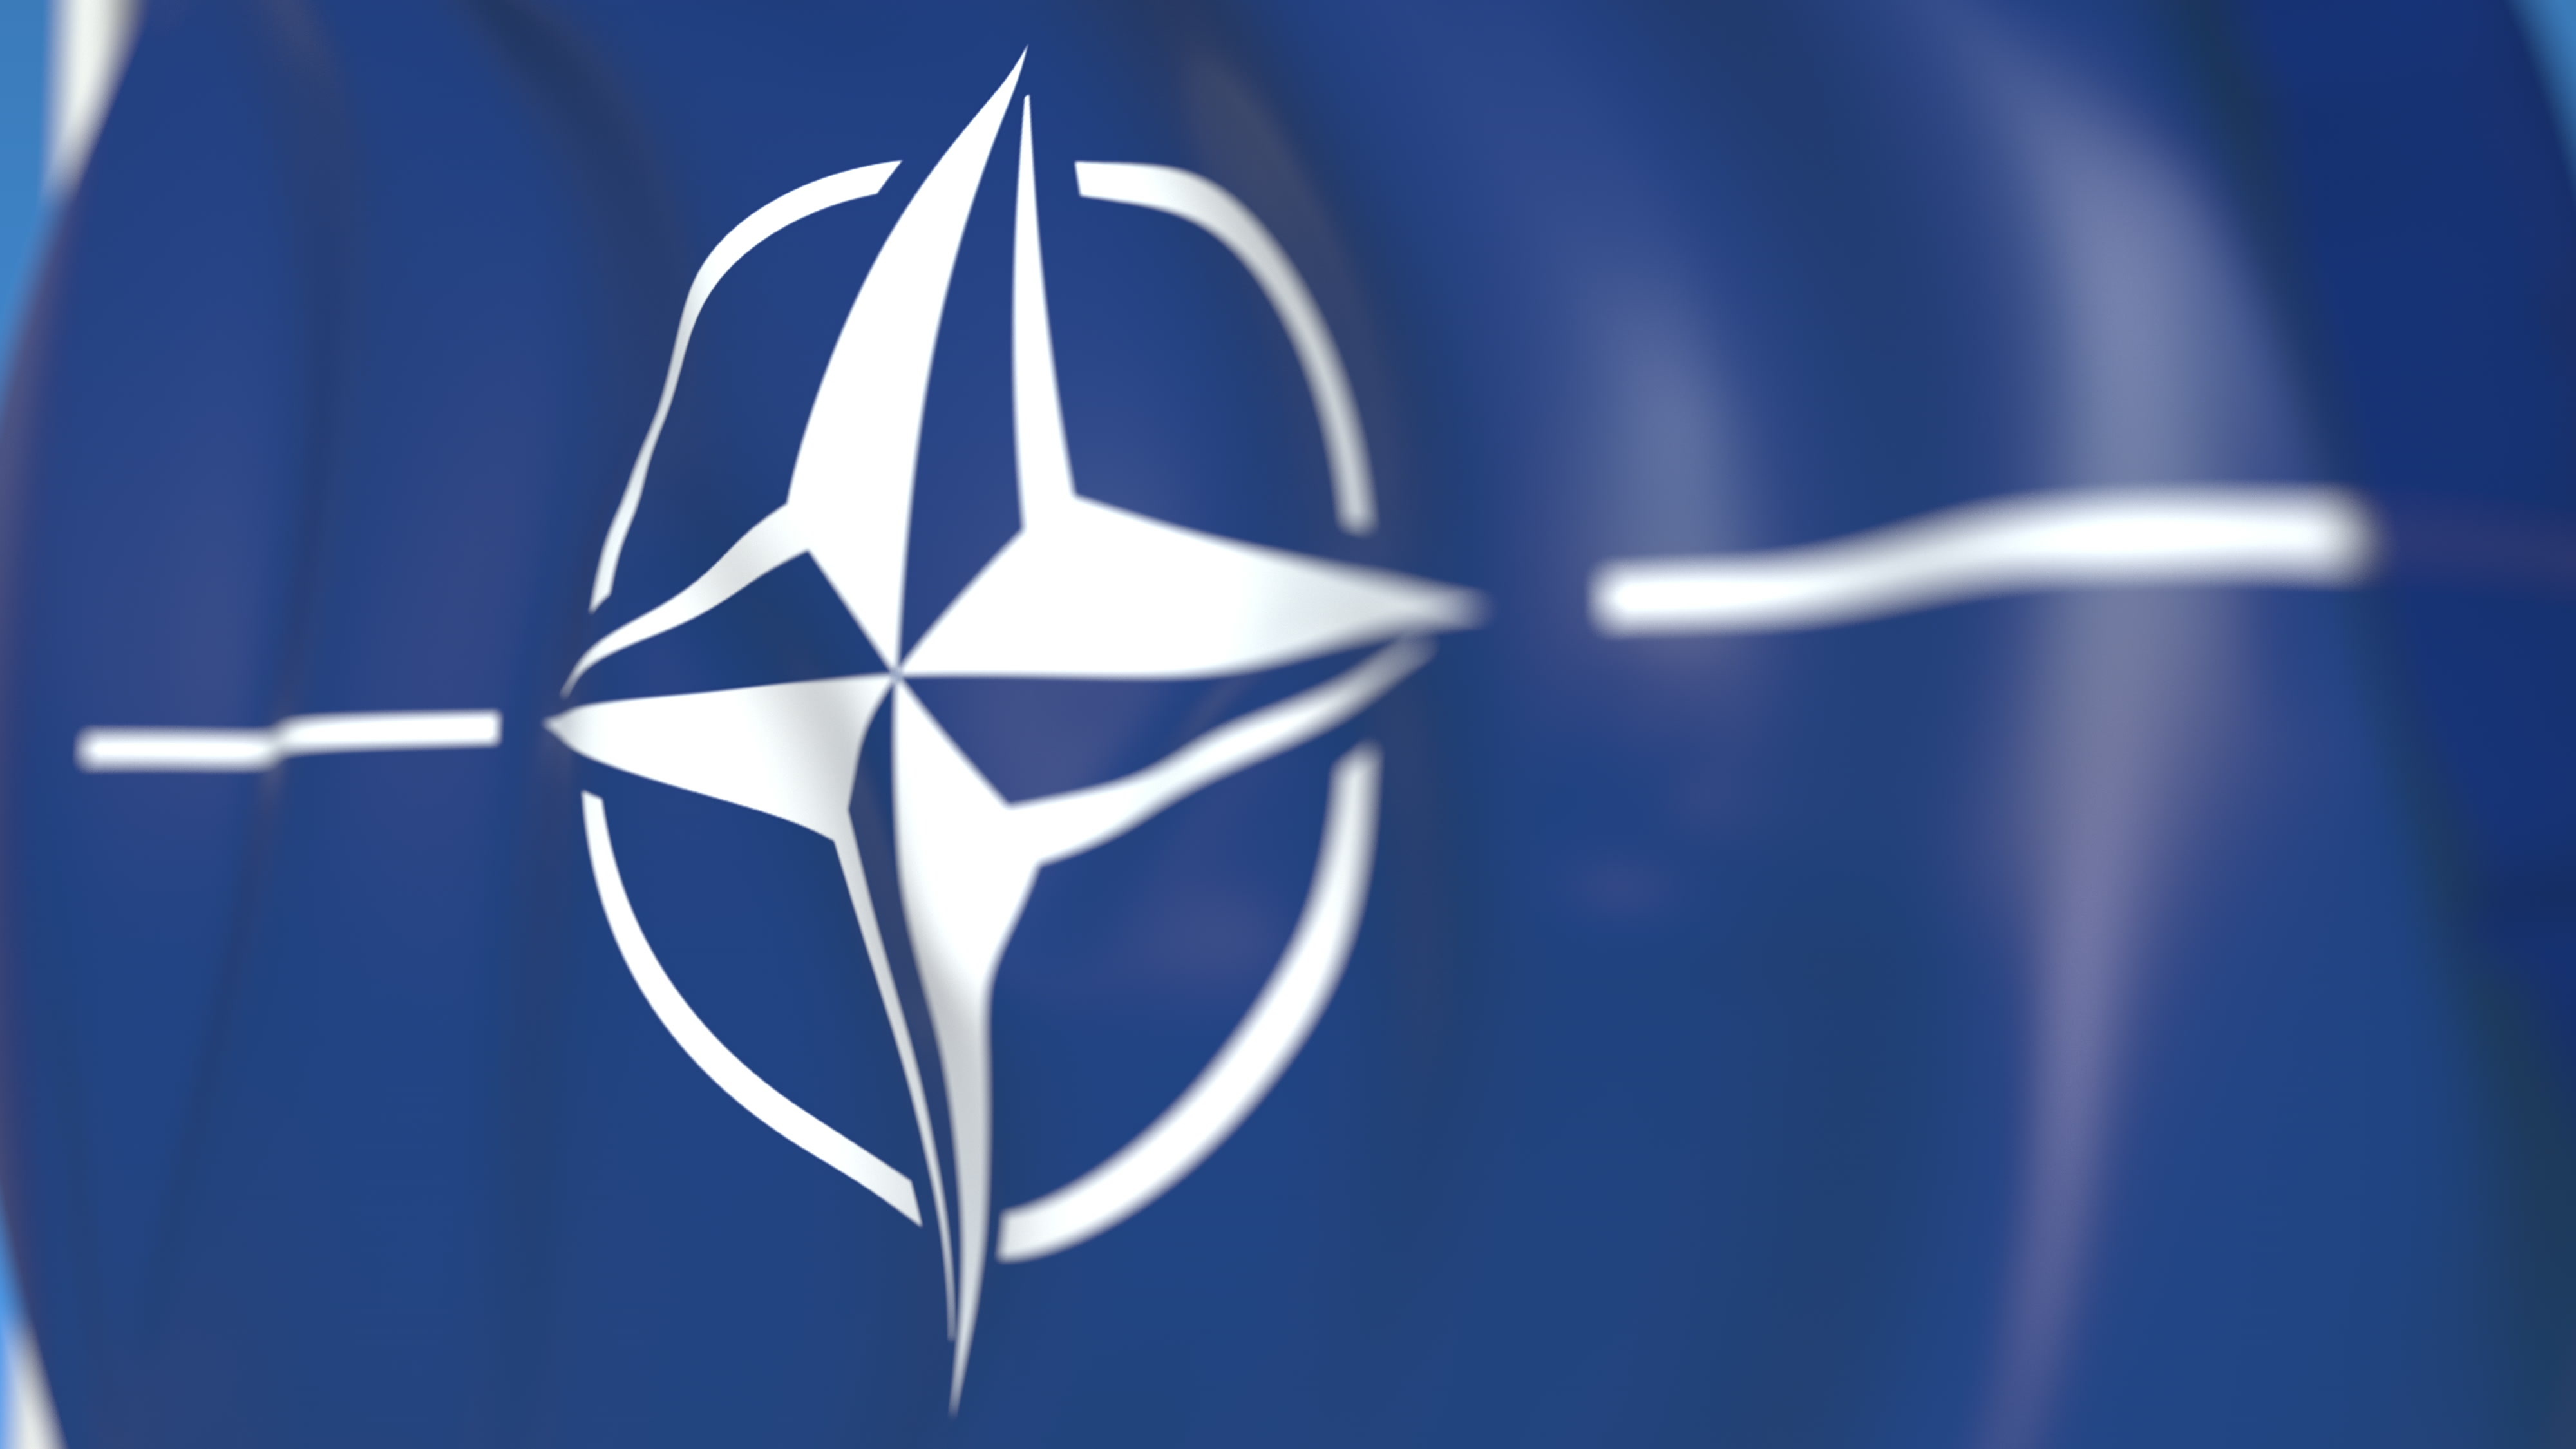 Volt Suomi and Volt Sverige demand NATO membership - Volt Europa